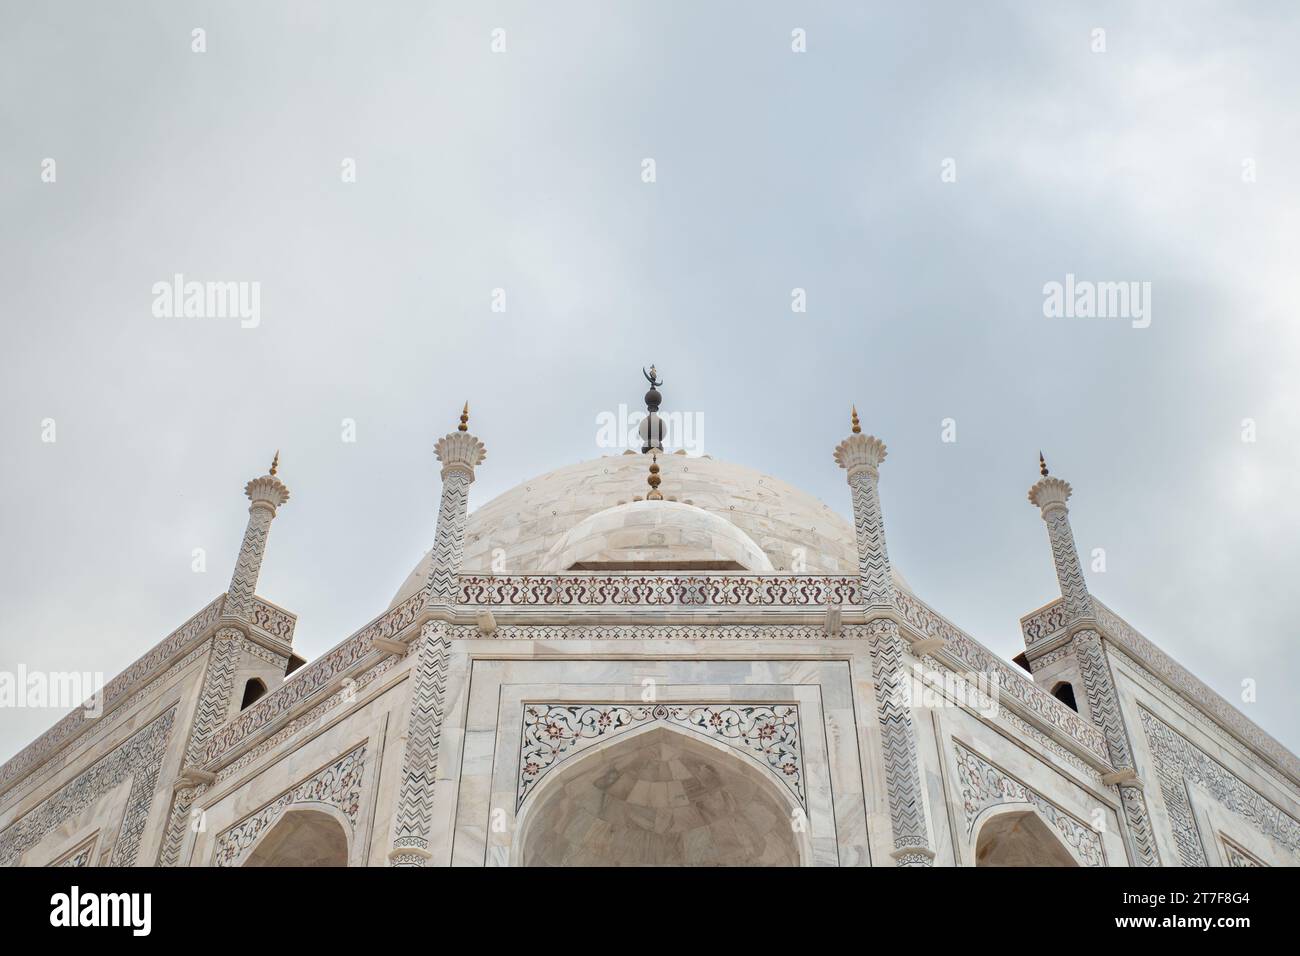 Die Spitze des Taj Mahal Mausoleums, Marmor weiß Stockfoto